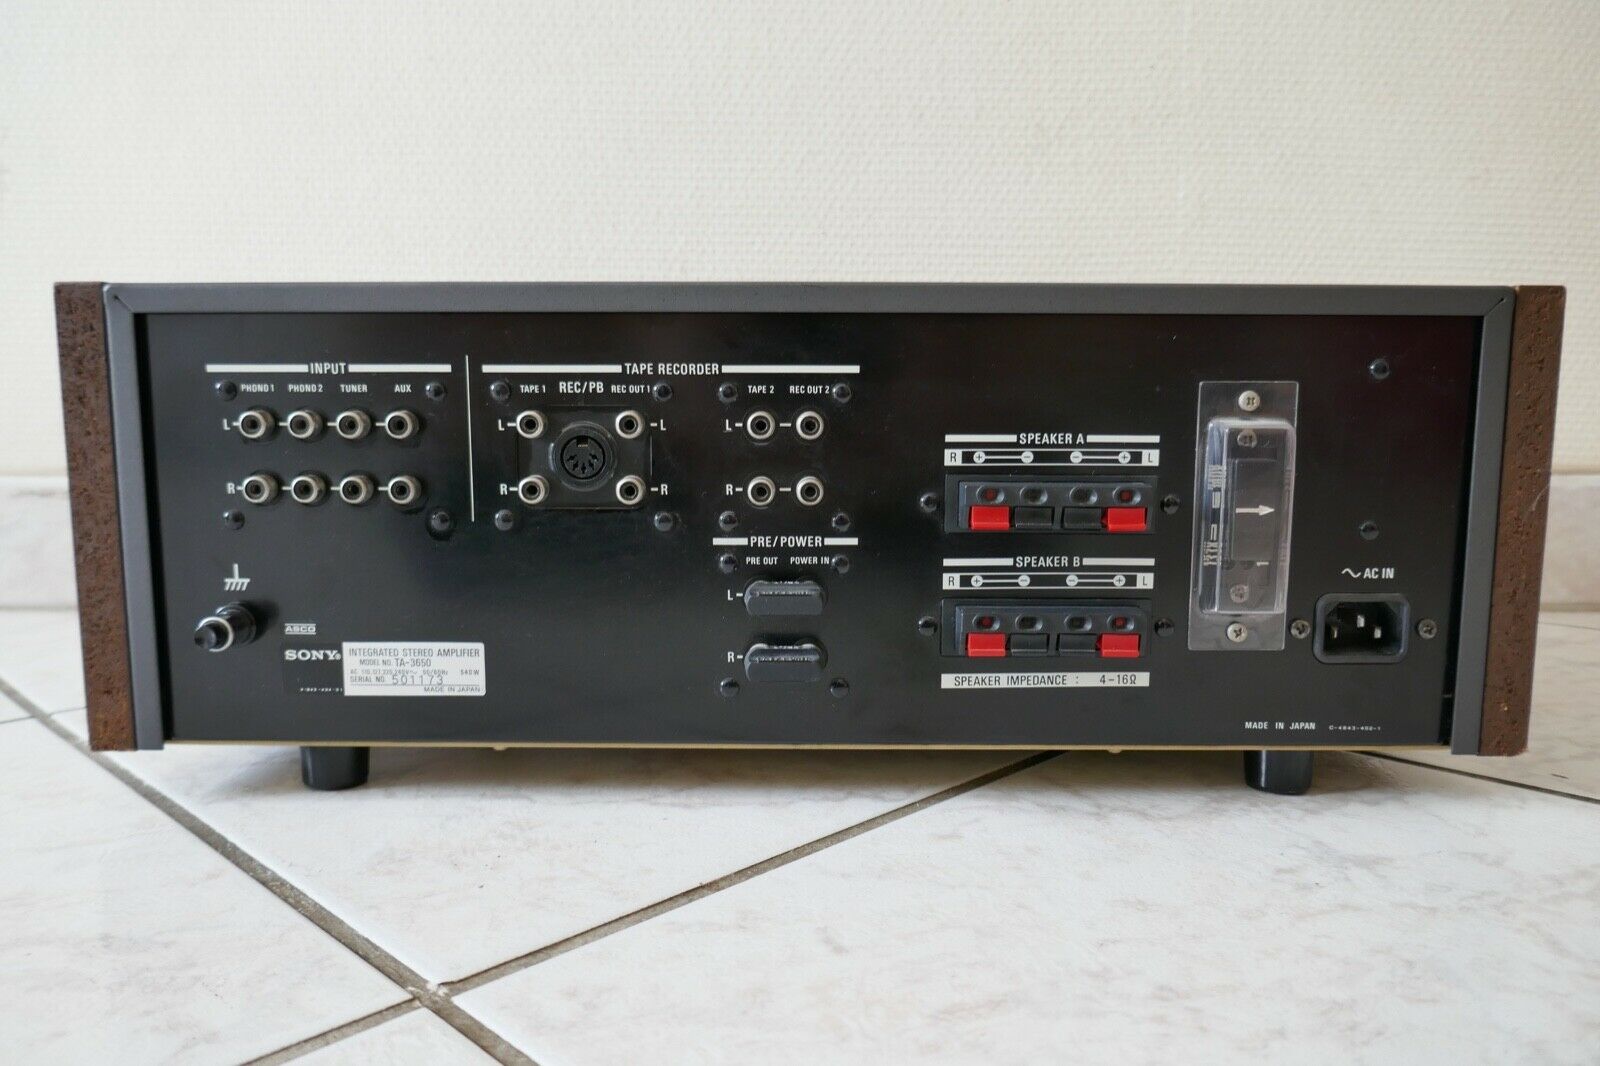 amplificateur amplifier sony ta-3650 vintage occasion